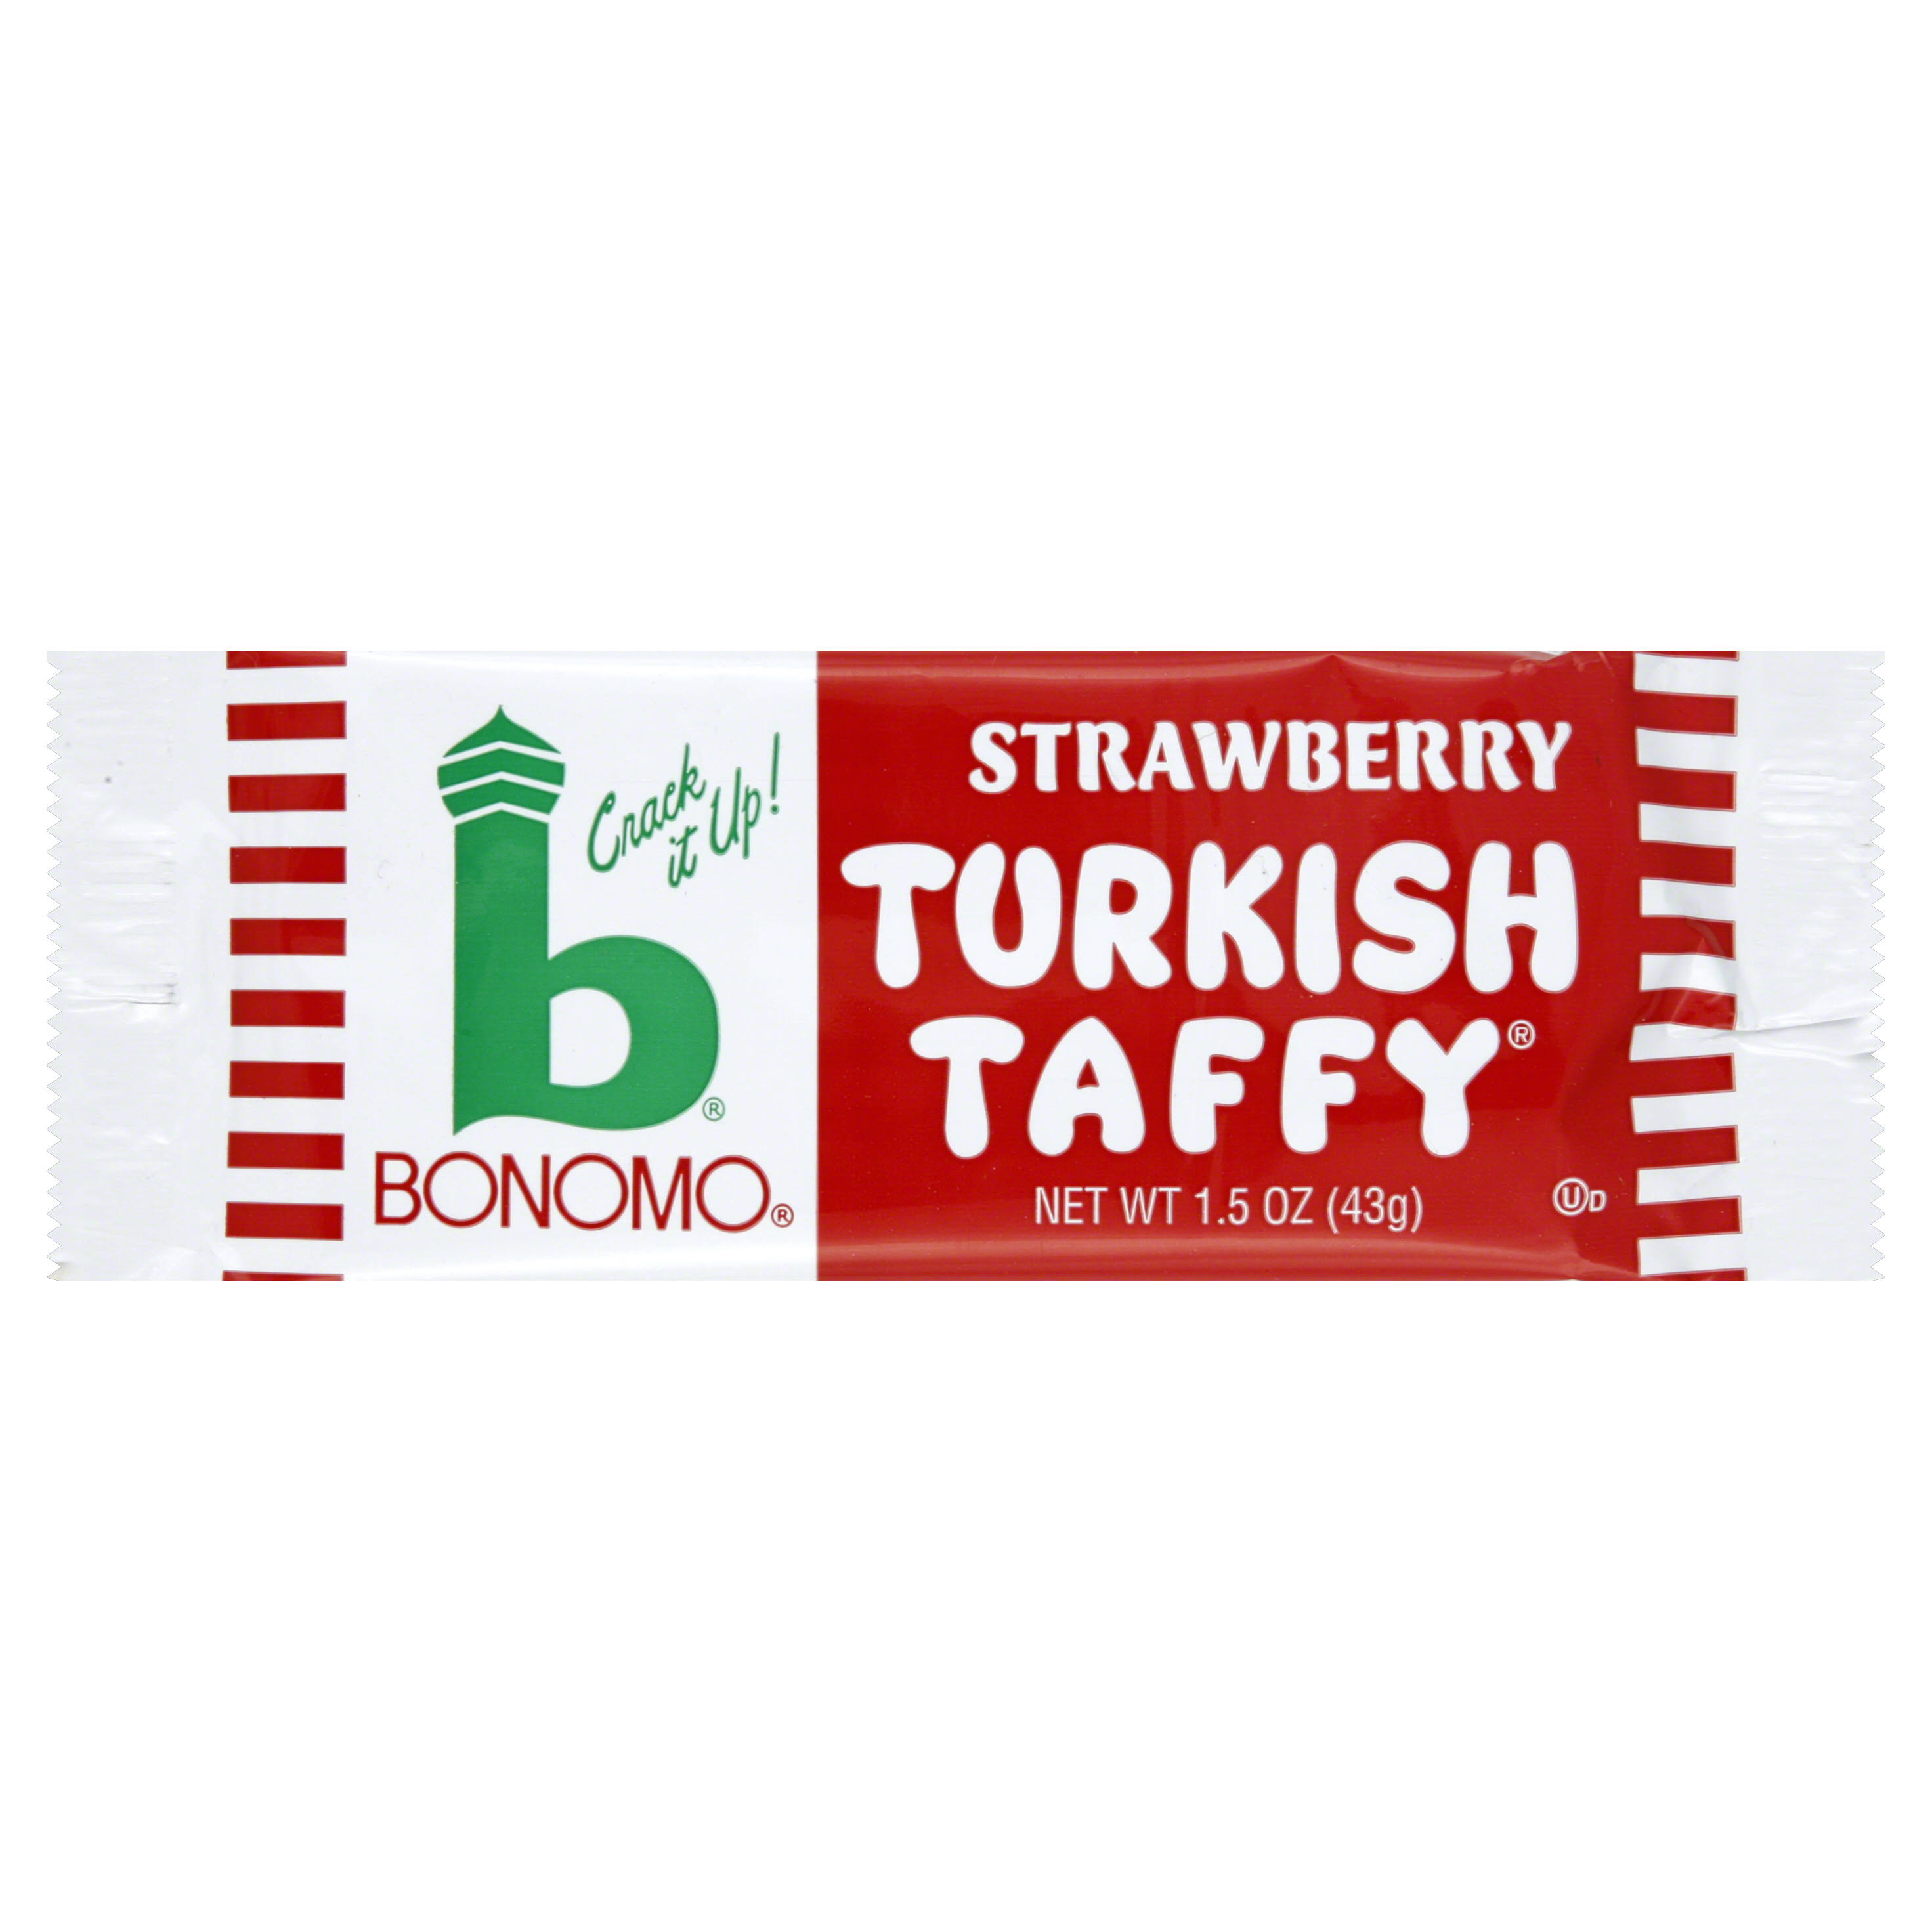 Bonomo Turkish Taffy, Strawberry - 1.5 oz